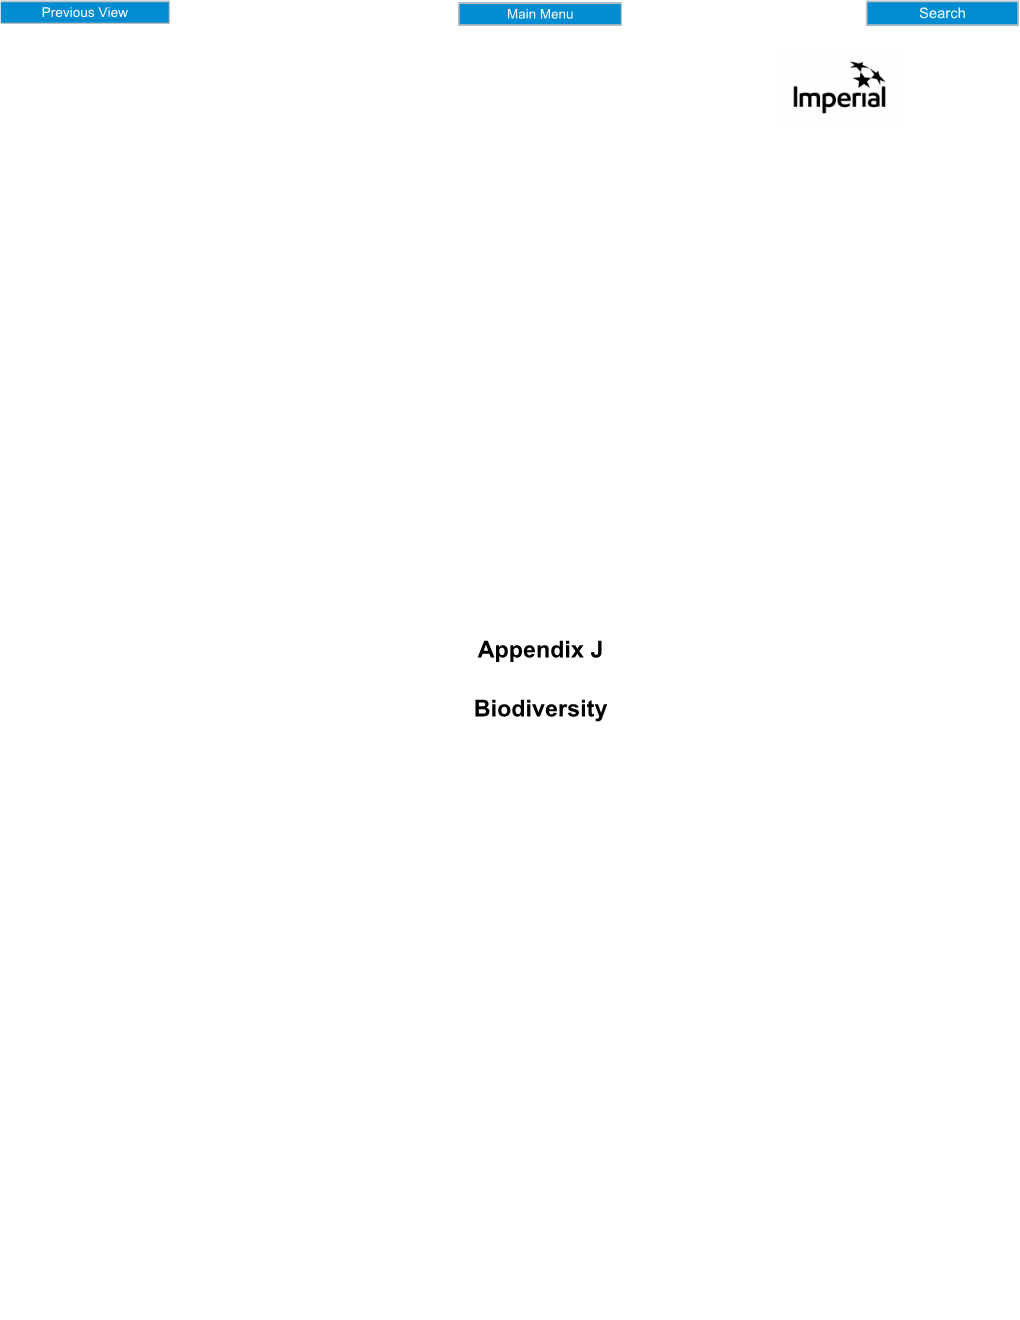 Vol3-Appendix J-Biodiversity